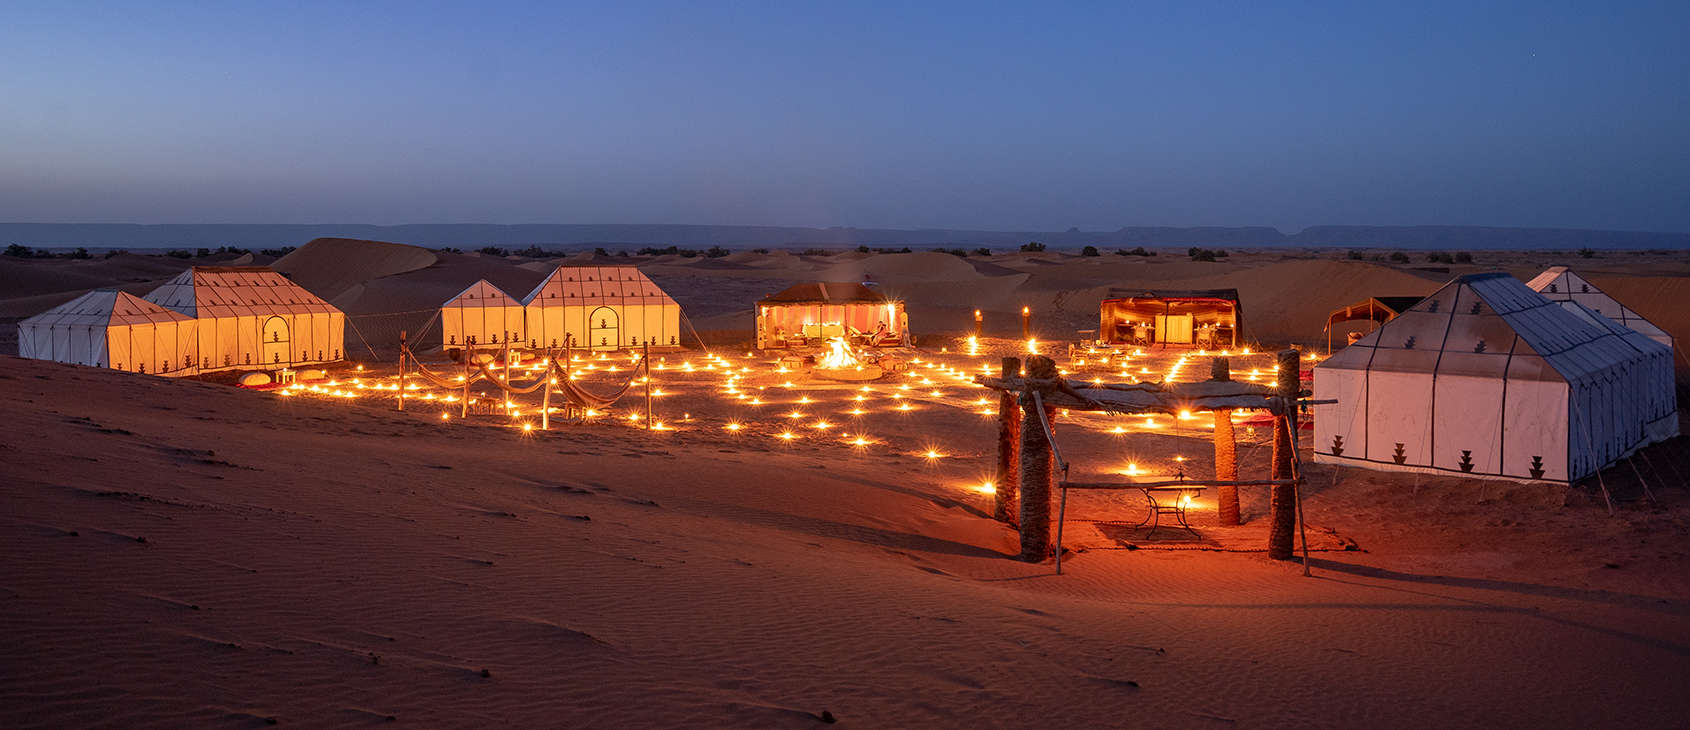 Erg Chigaga Luxury Desert Camp Morocco, Private Camp at dusk